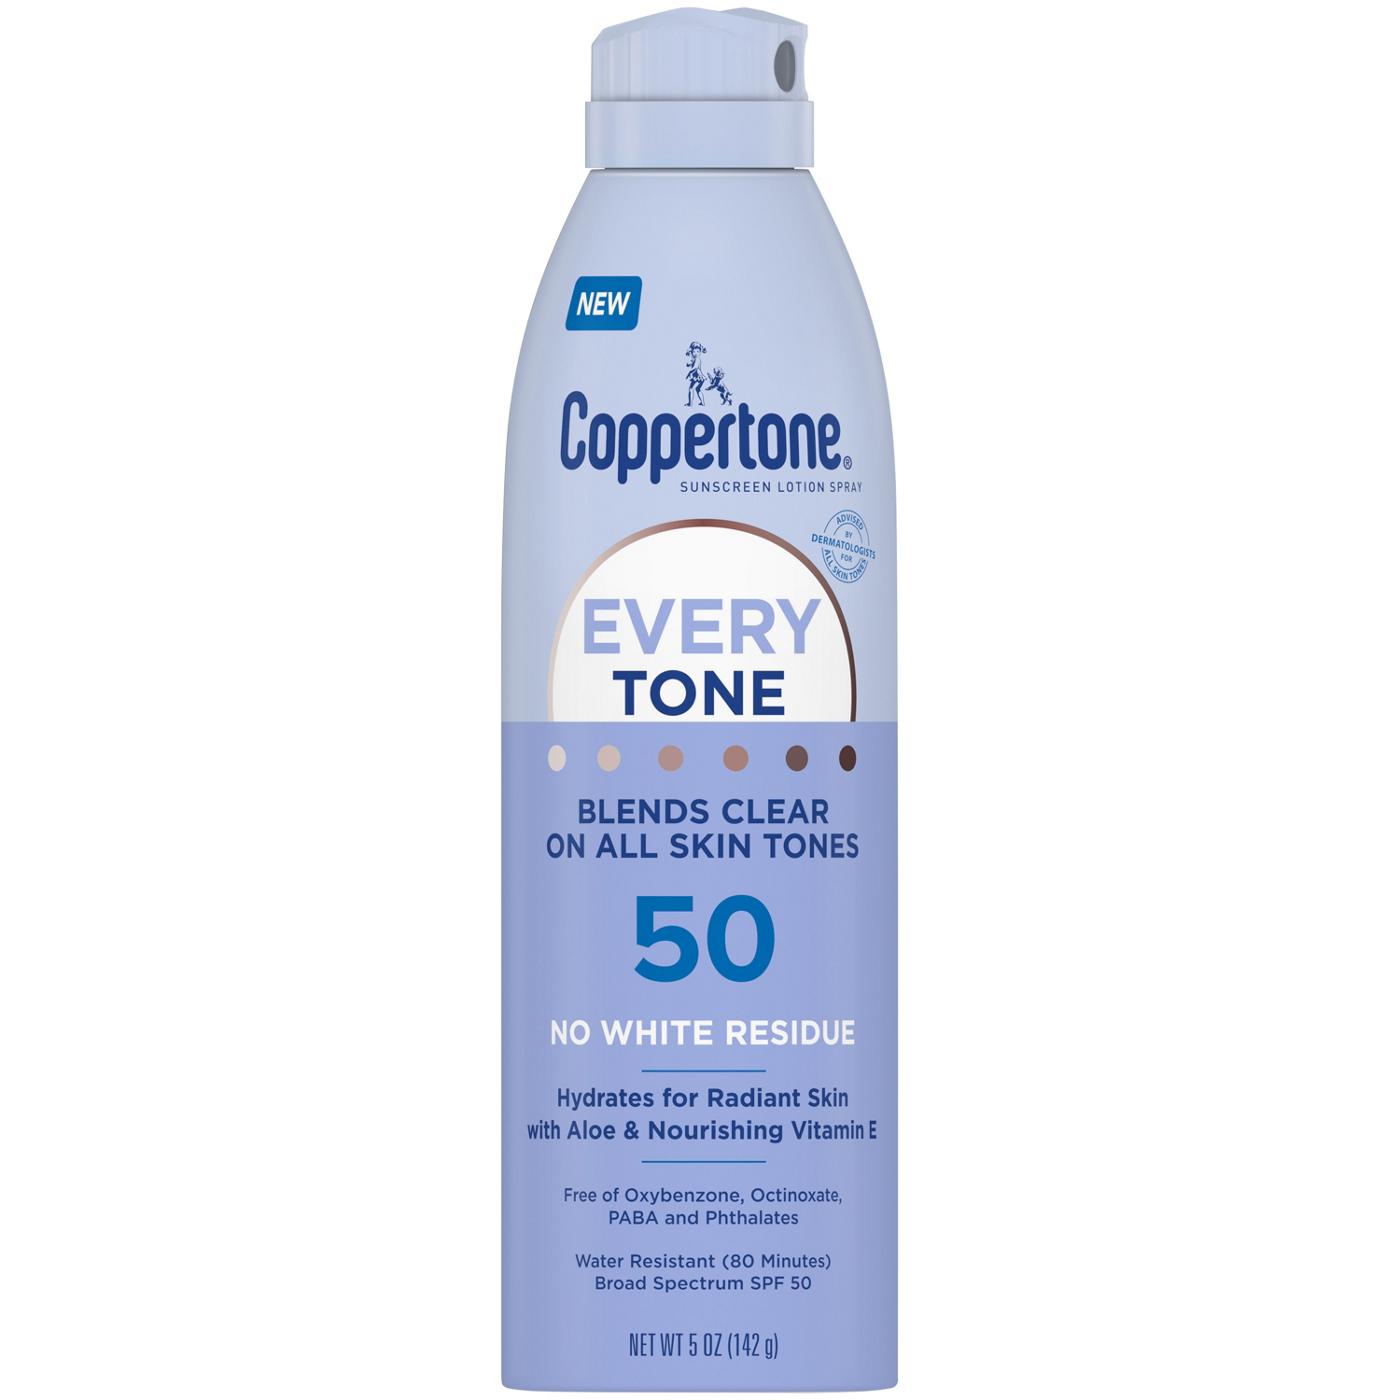 Coppertone Every Tone Sunscreen Spray SP 50; image 1 of 2